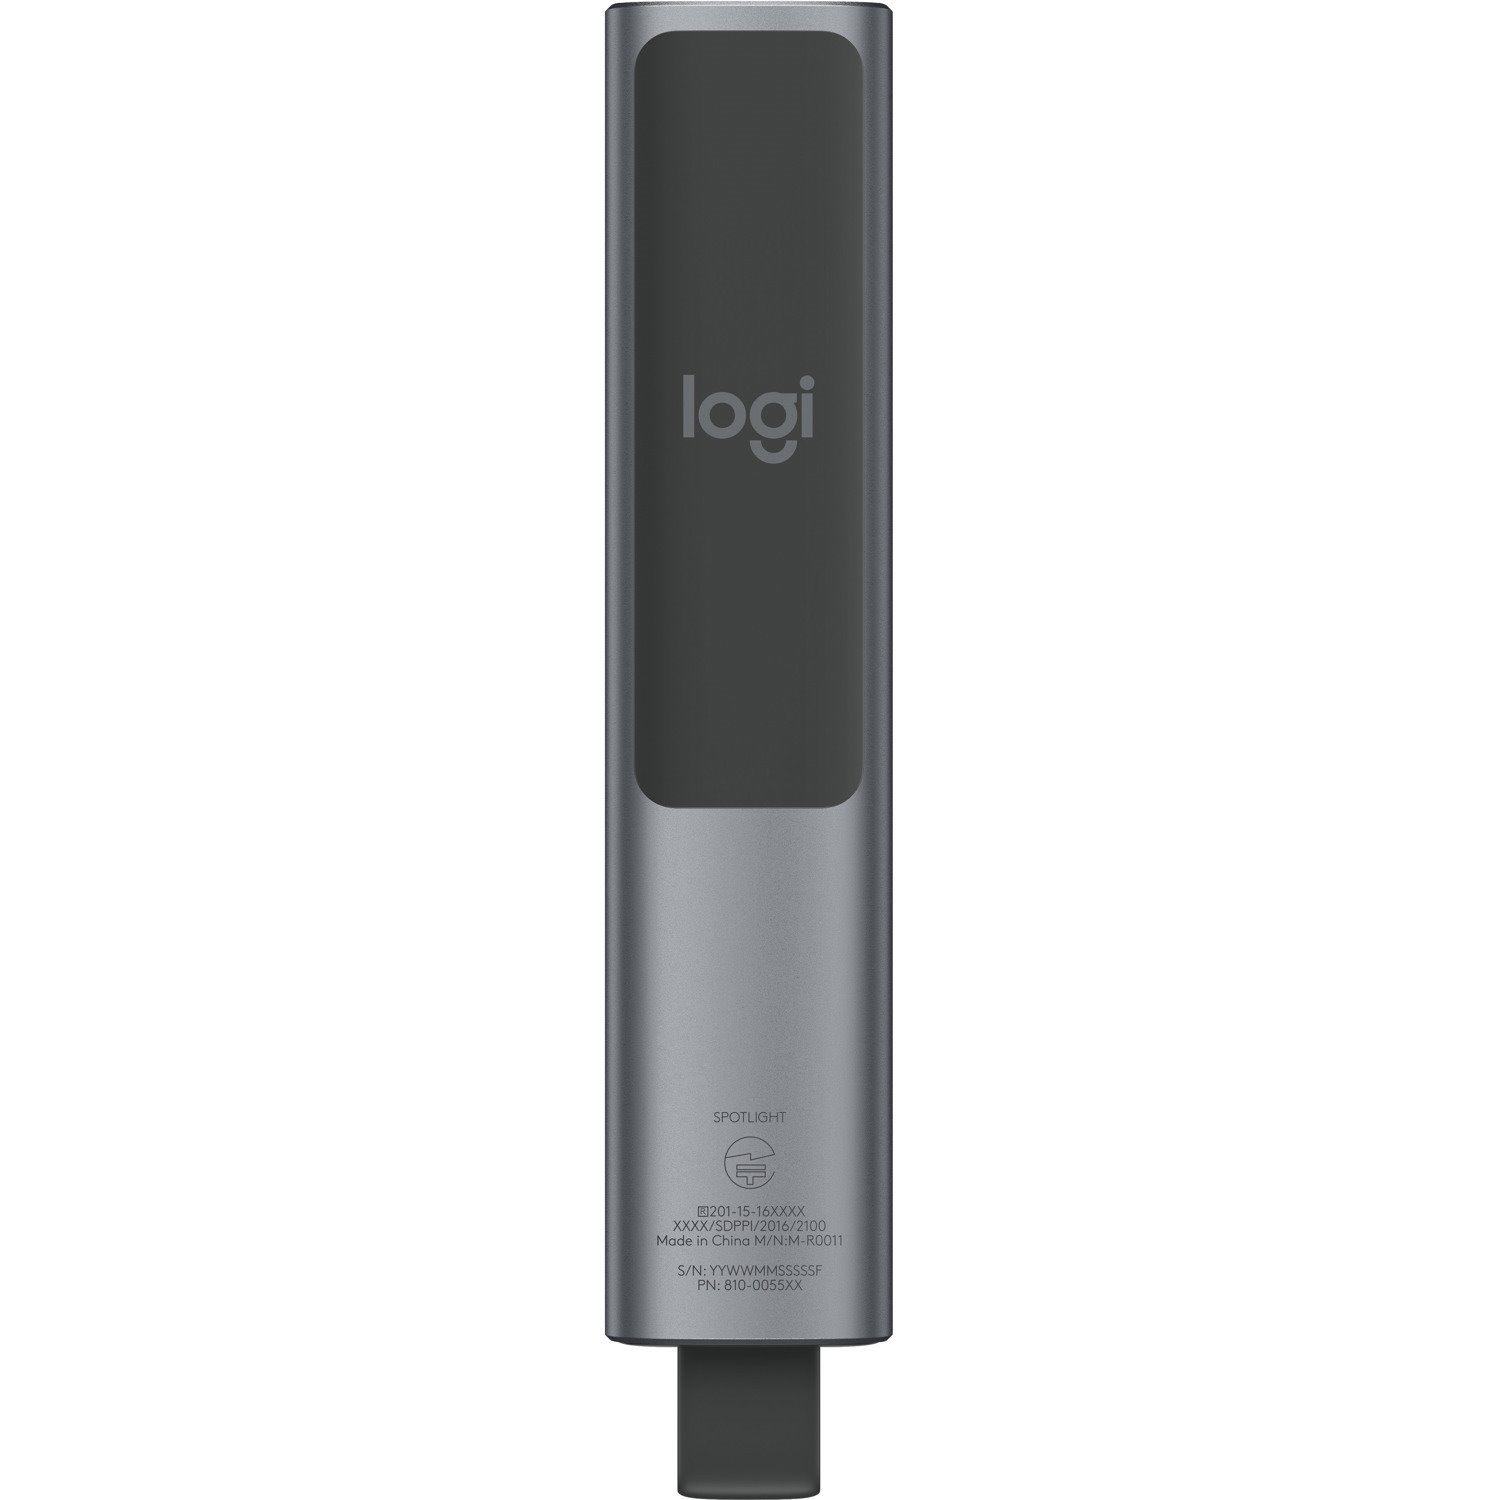 Logitech Spotlight Wireless Universal Remote Control